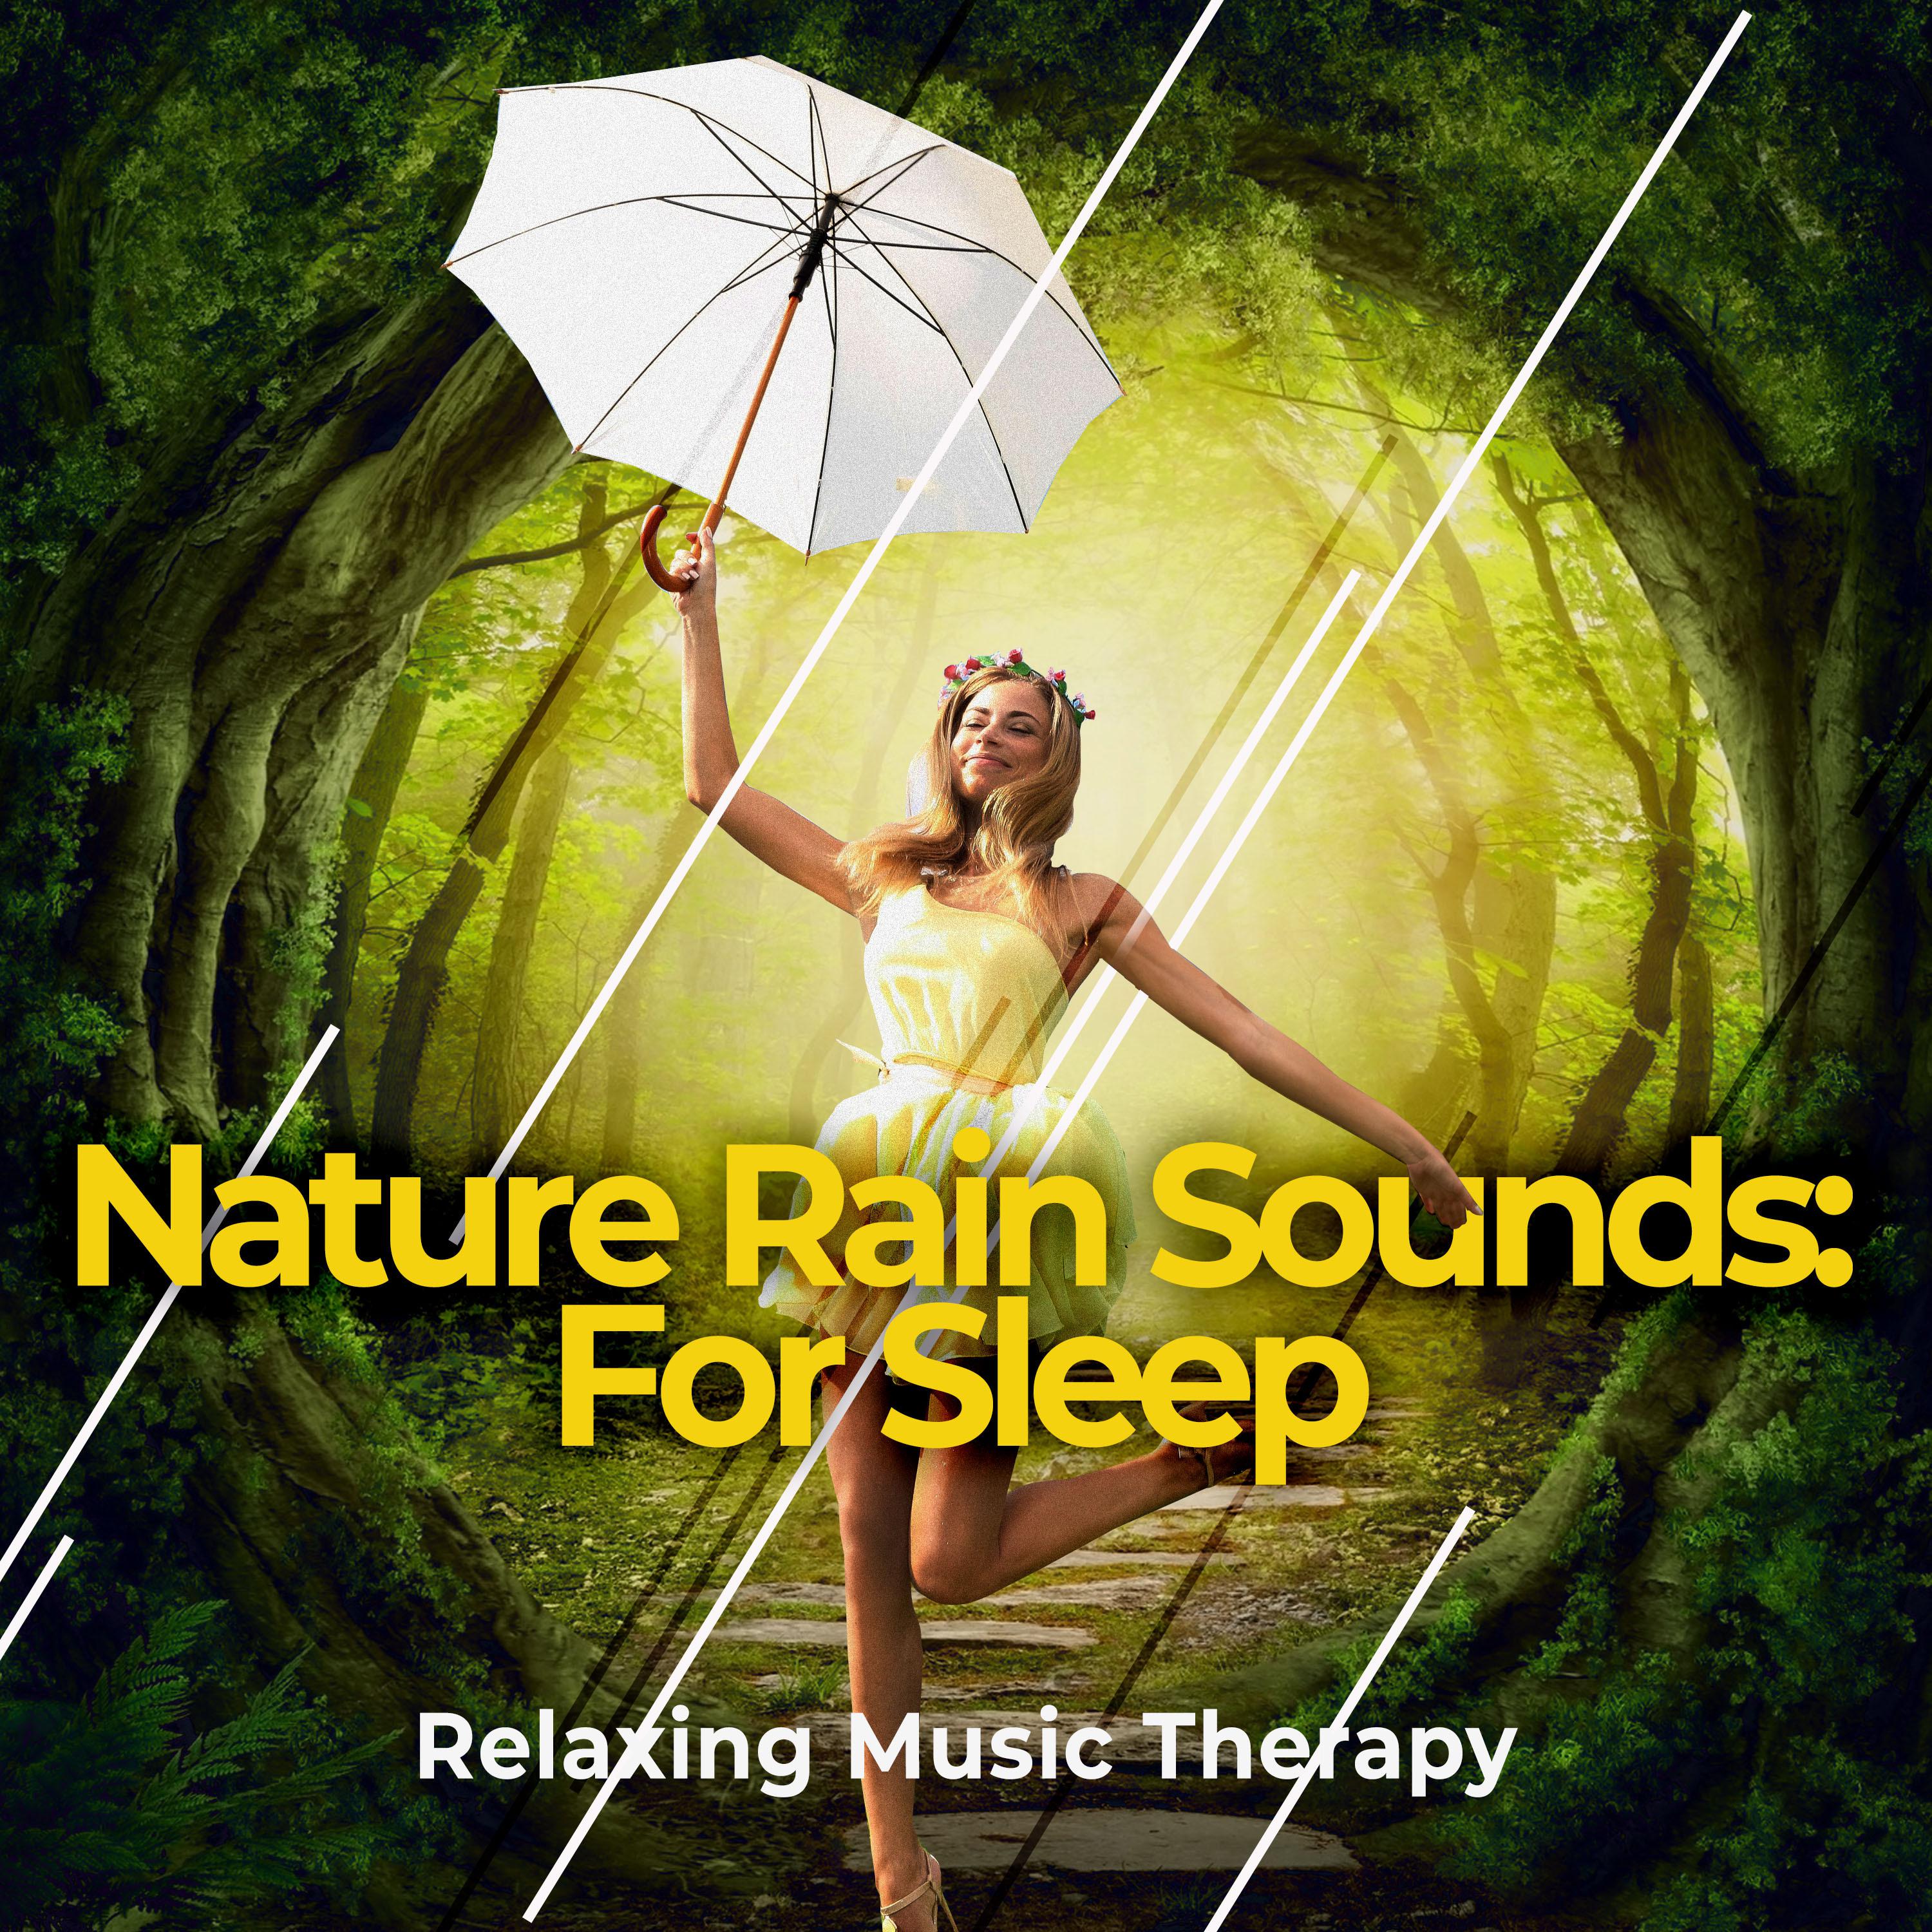 Nature Rain Sounds: For Sleep